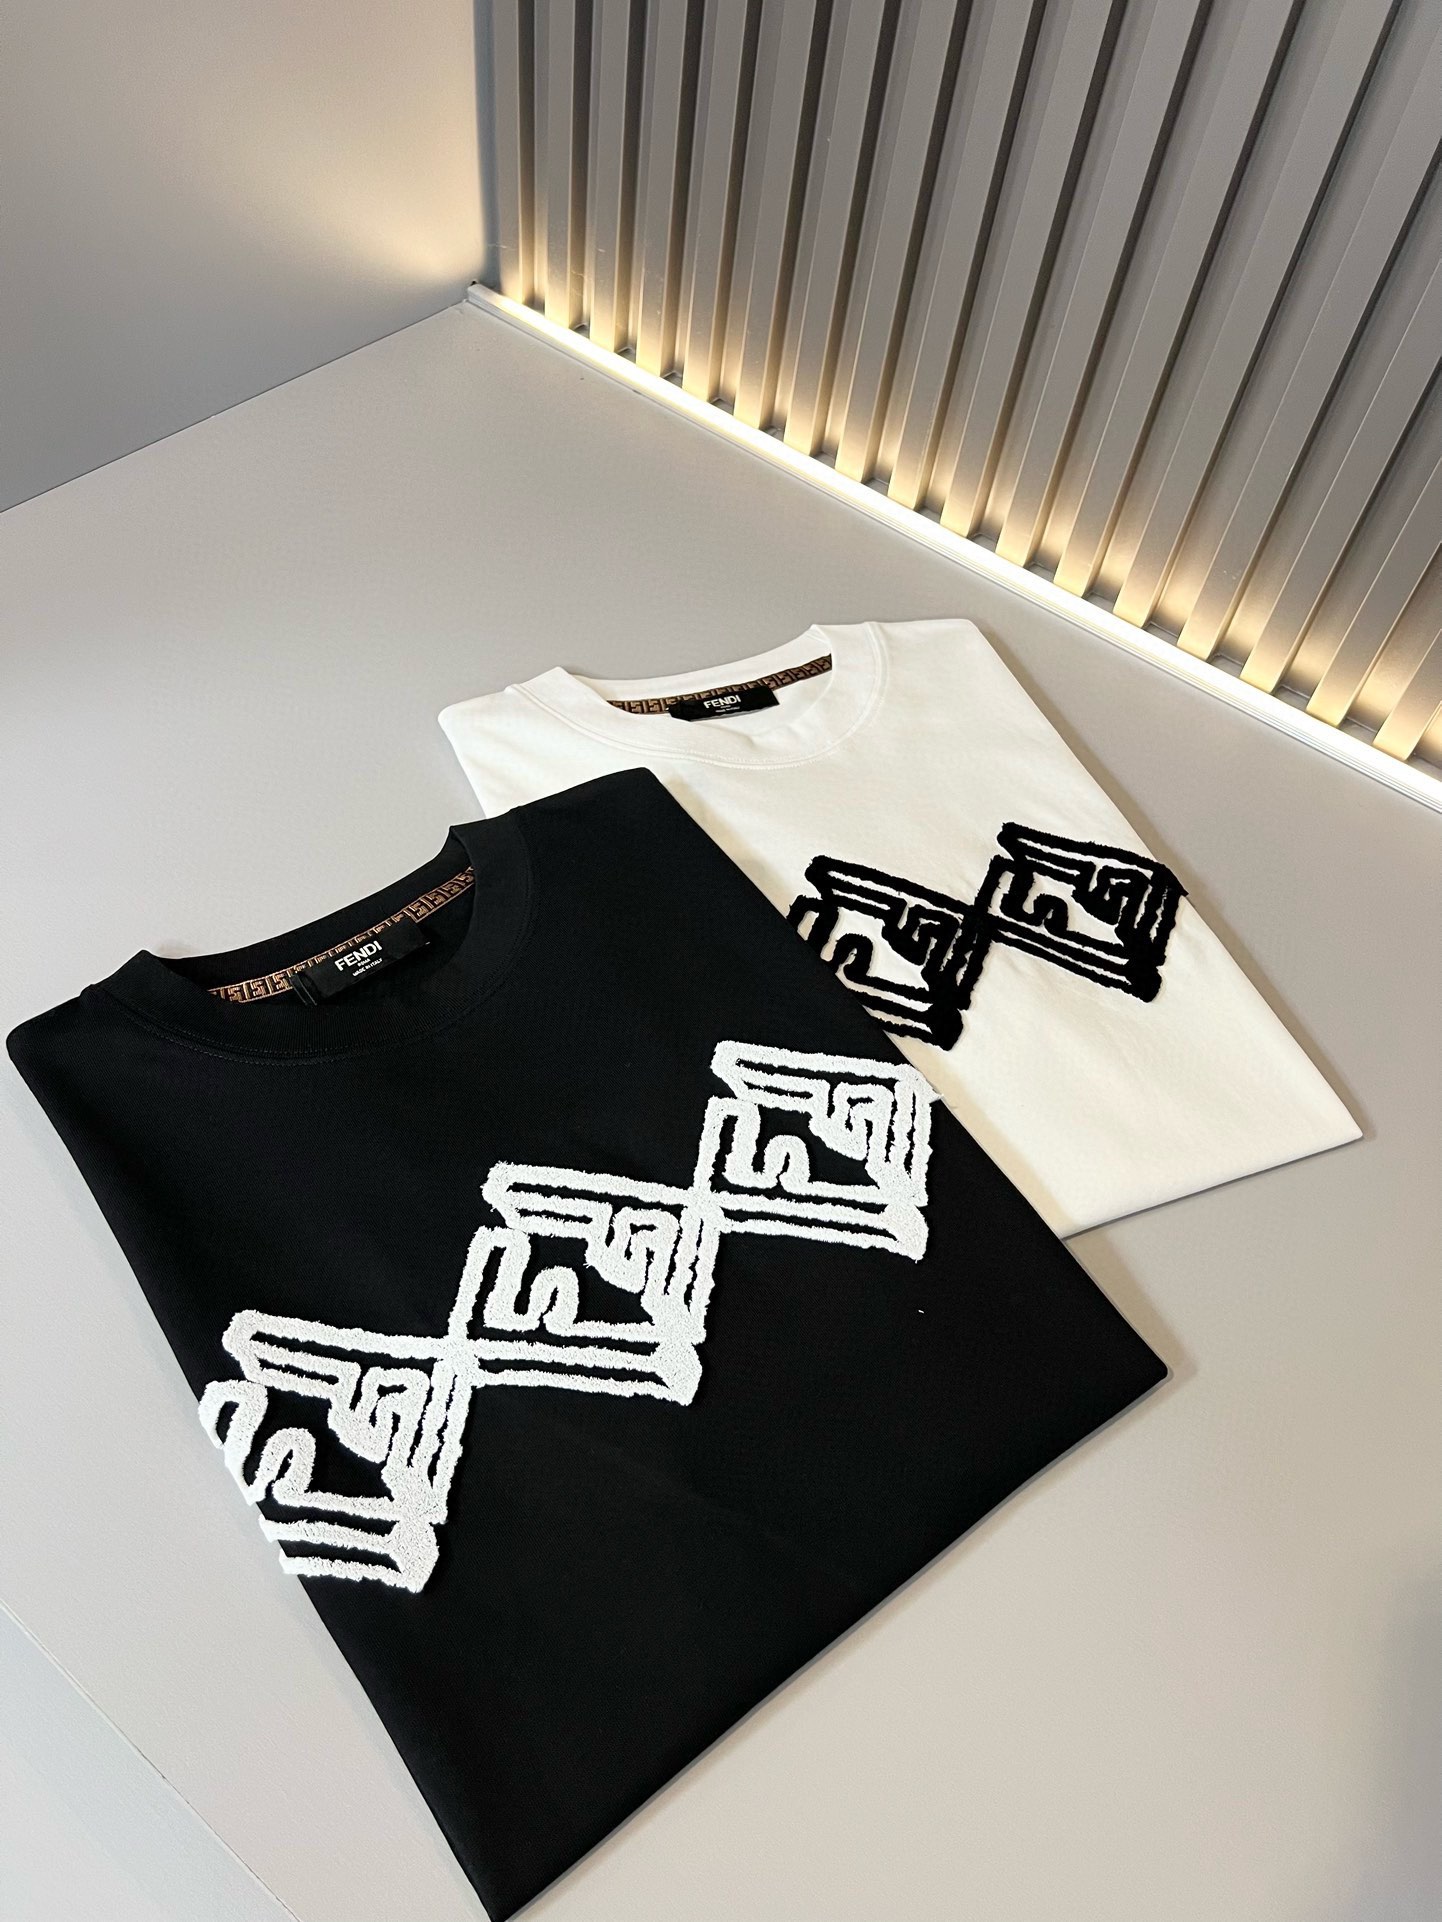 Fendi Clothing T-Shirt Black White Unisex Cotton Spring/Summer Collection Fashion Short Sleeve